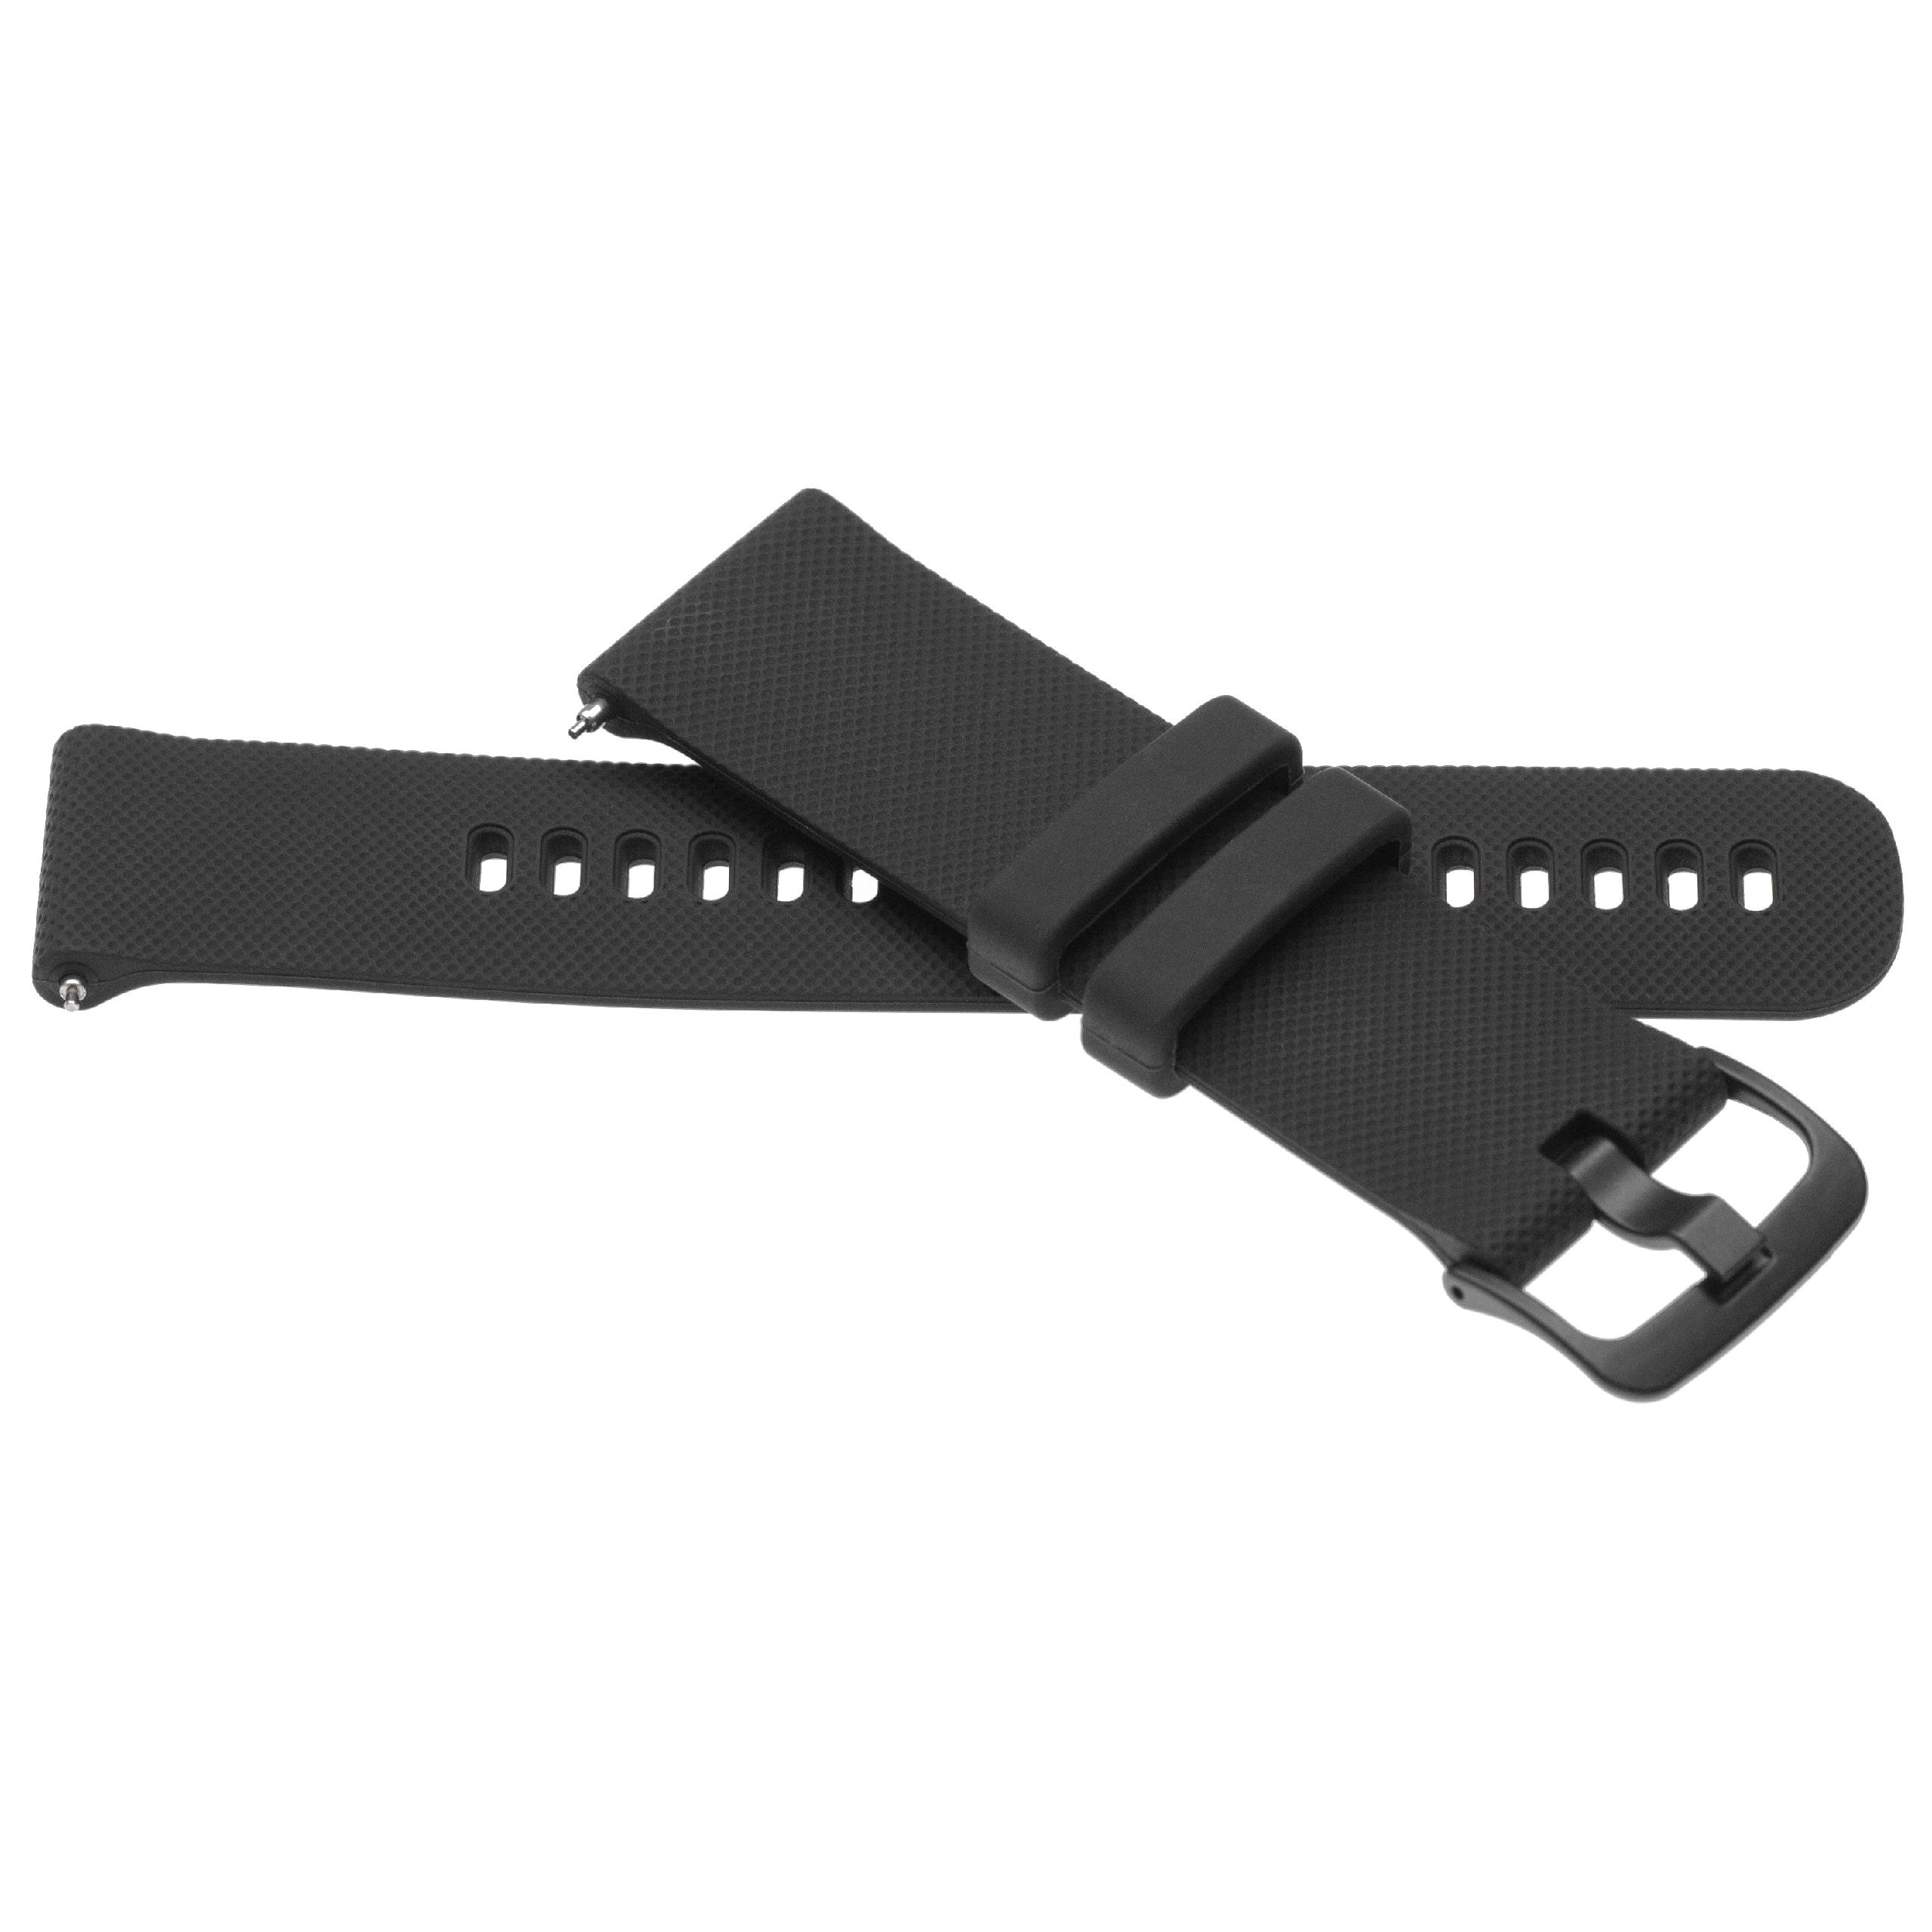 wristband for Garmin Vivoactive Smartwatch - 12.1 + 9.2 cm long, 22mm wide, silicone, black